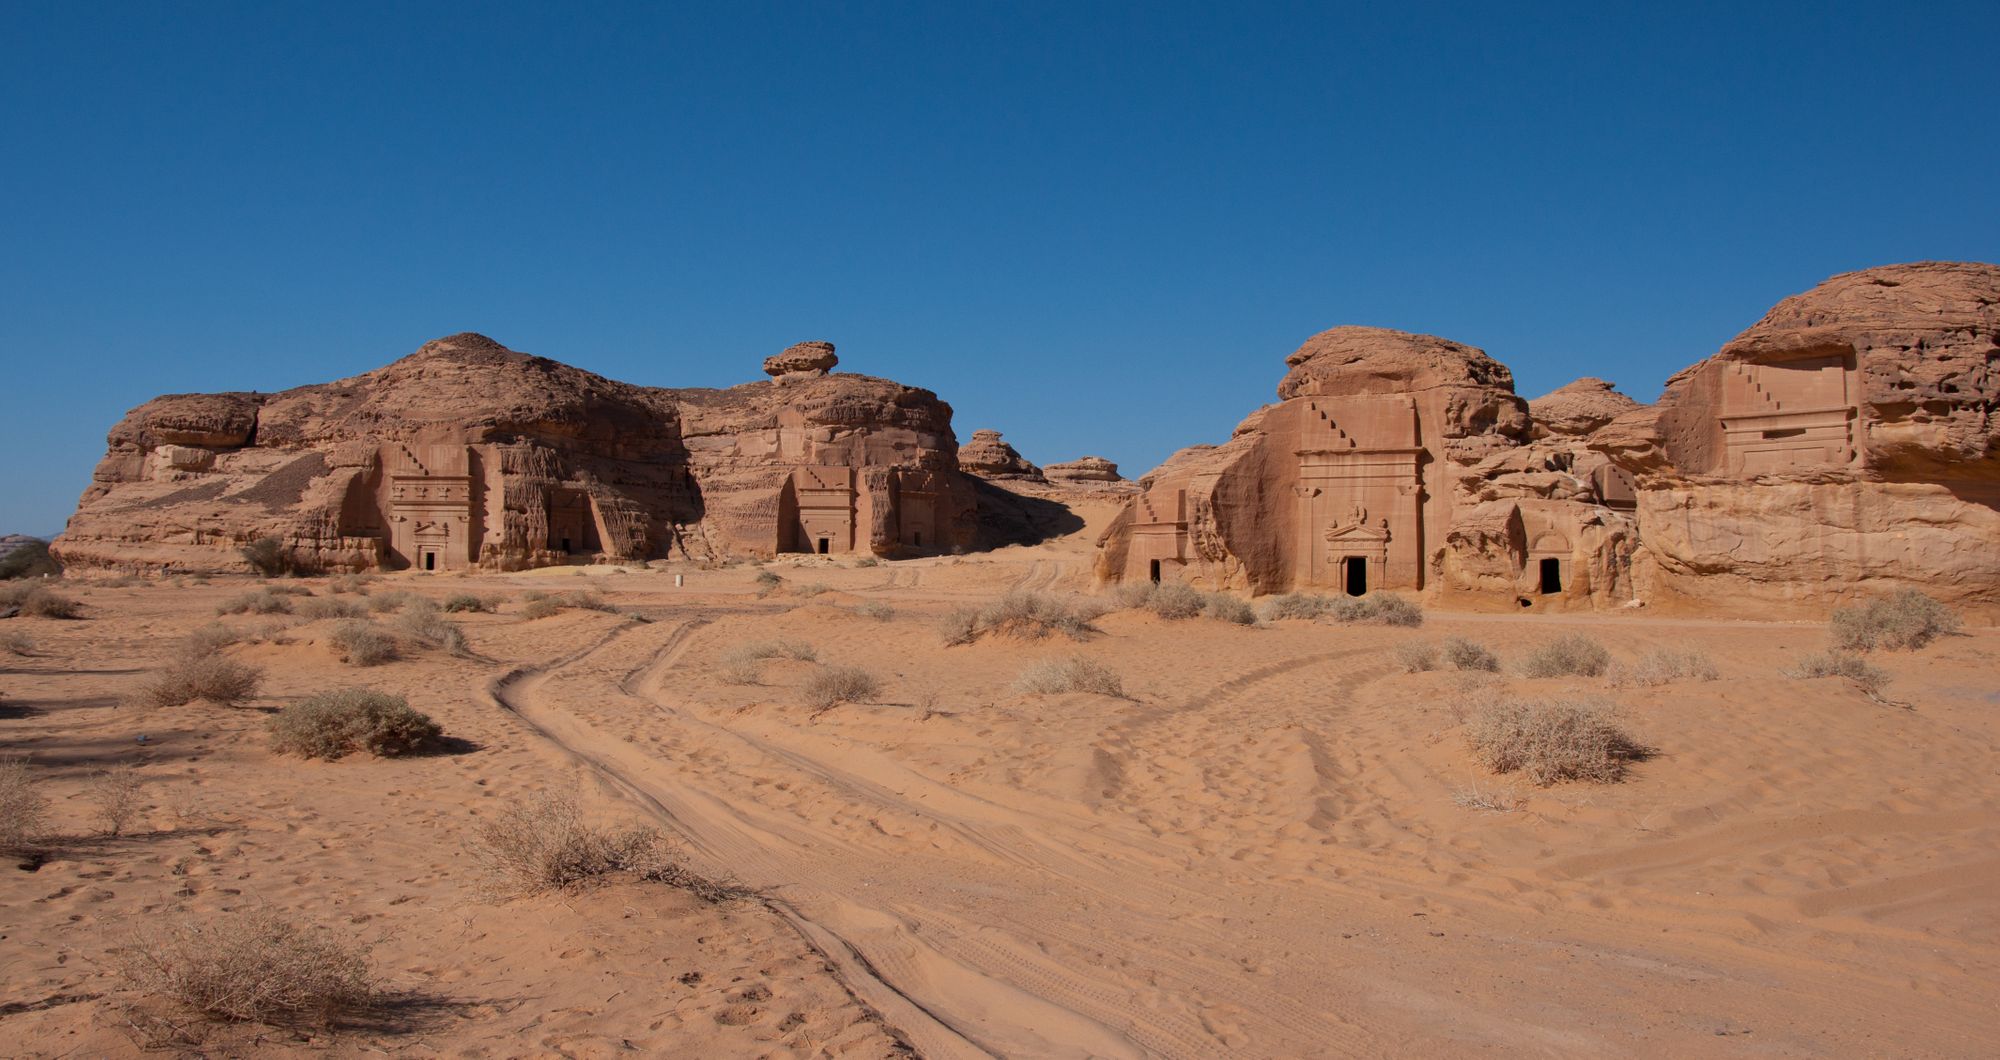 https://bubo.sk/uploads/galleries/20913/tombs-and-landscape-in-al-hijr-al-hijr-archaeological-site-madain-saleh-in-saudi-arabia.jpg